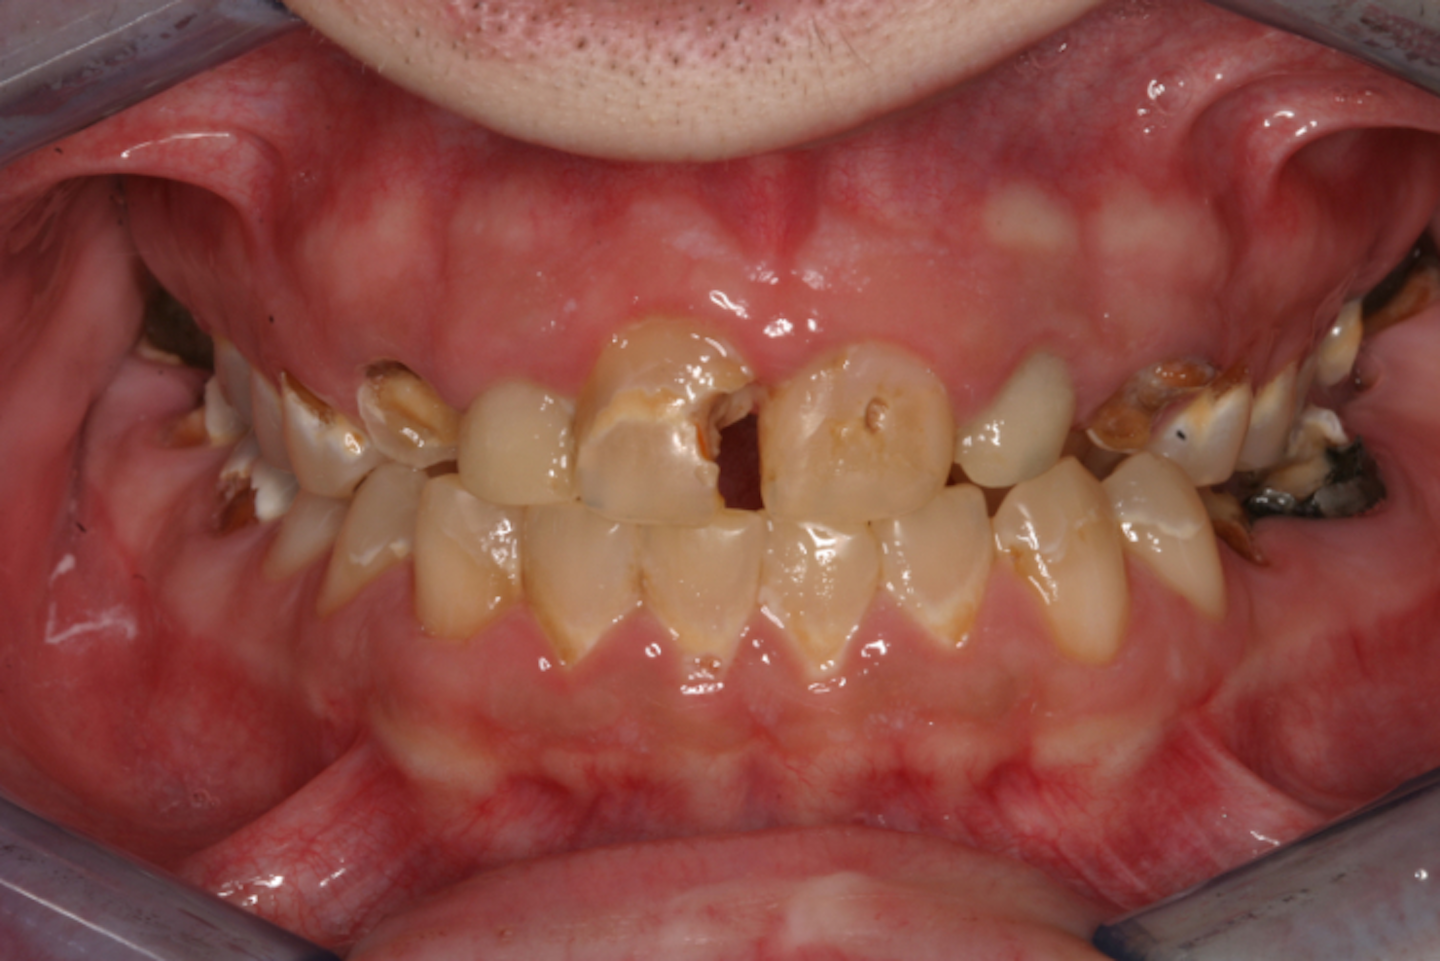 14+ History Of Present Illness Dental Example Pics